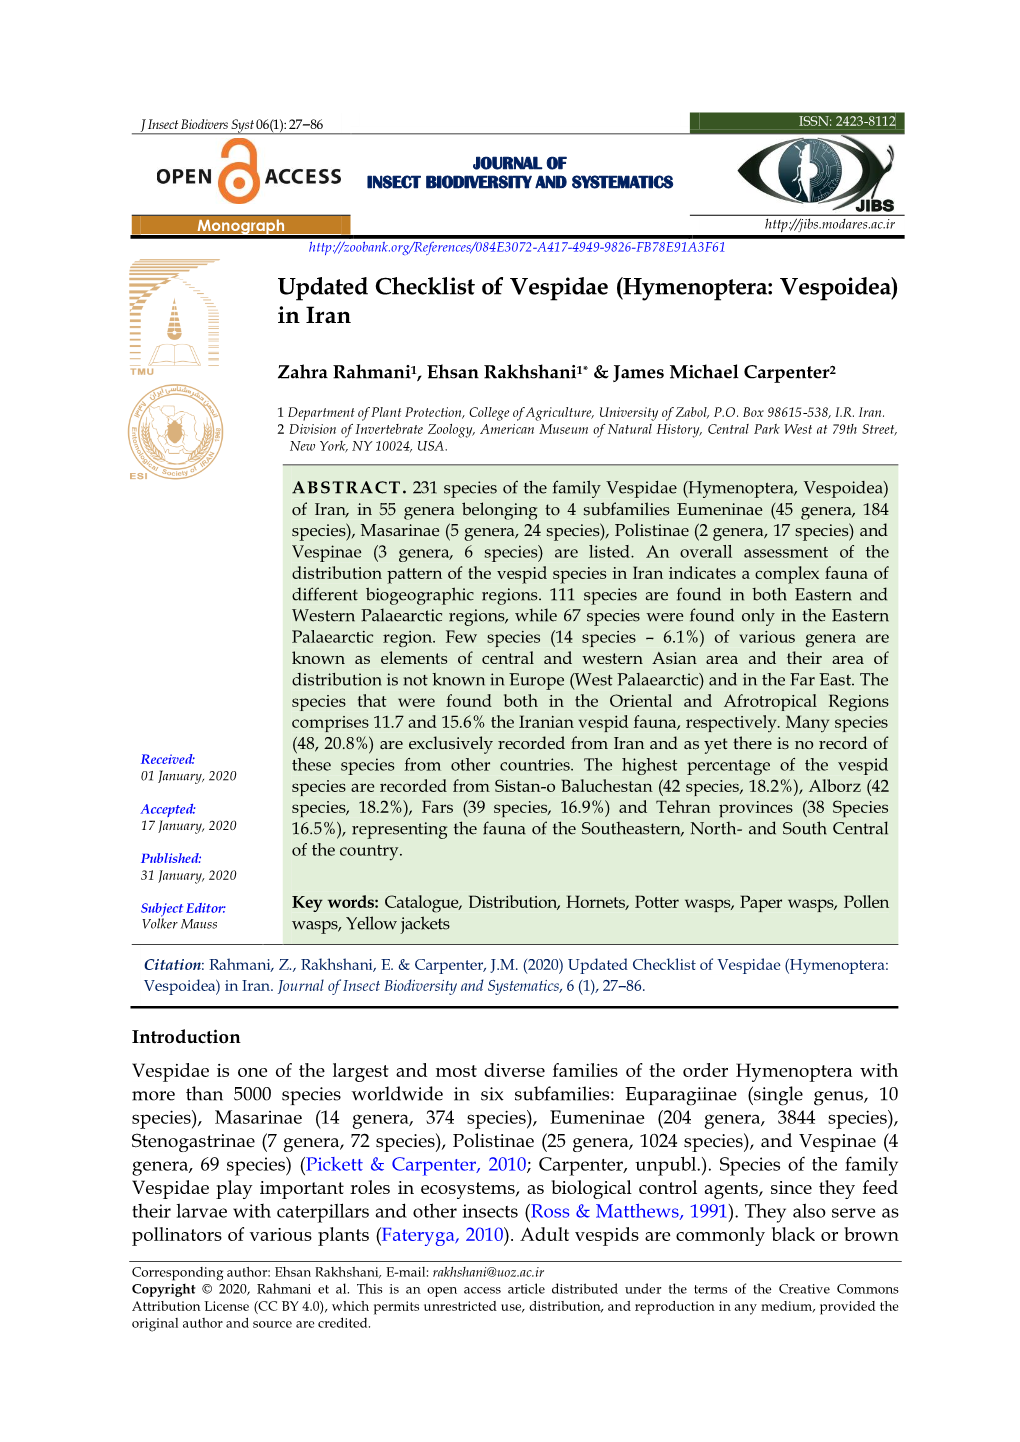 Updated Checklist of Vespidae (Hymenoptera: Vespoidea) in Iran